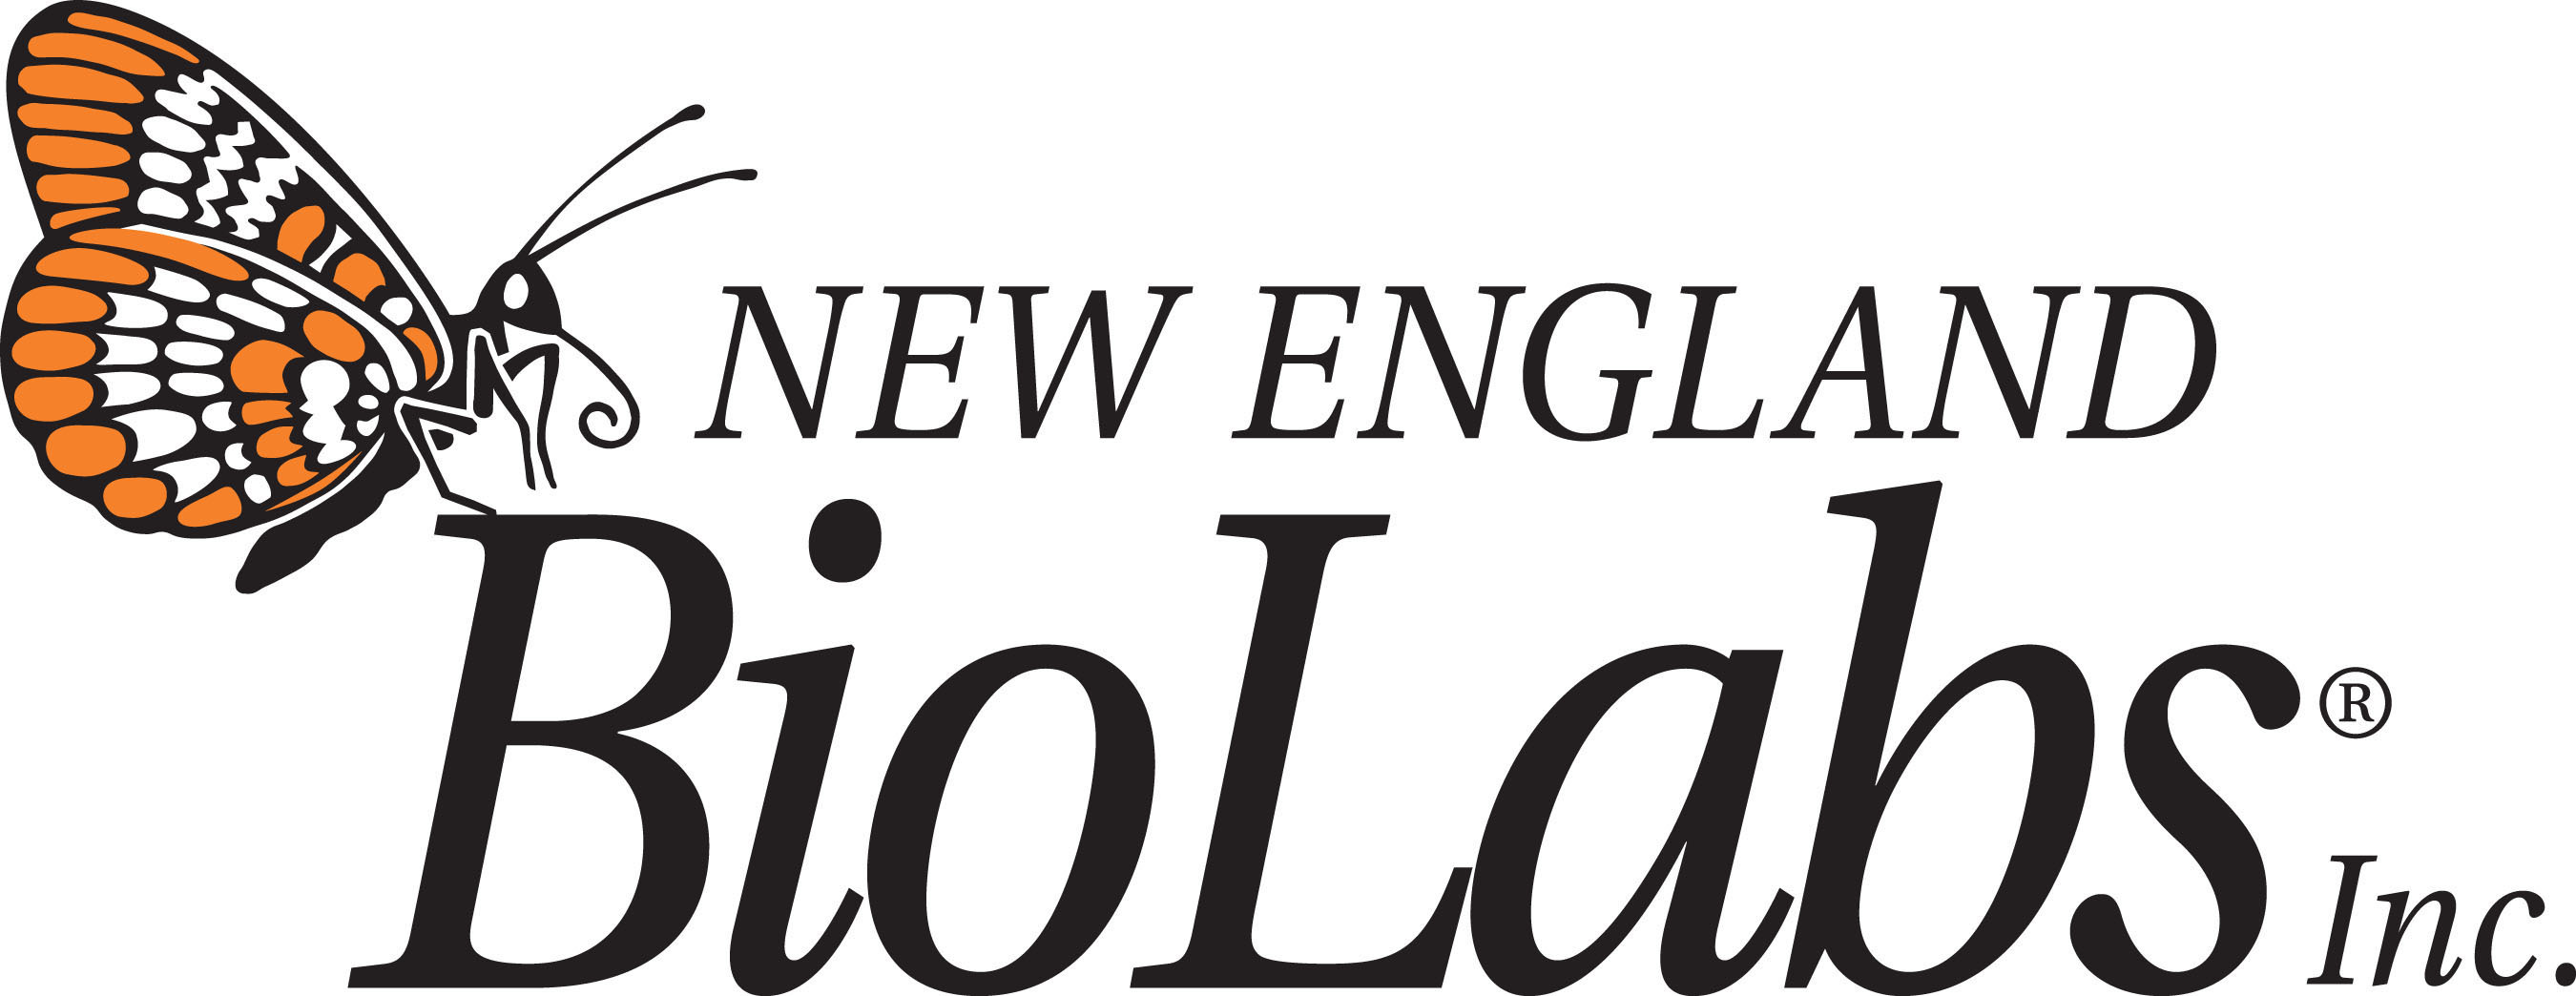 New England Biolabs logo.